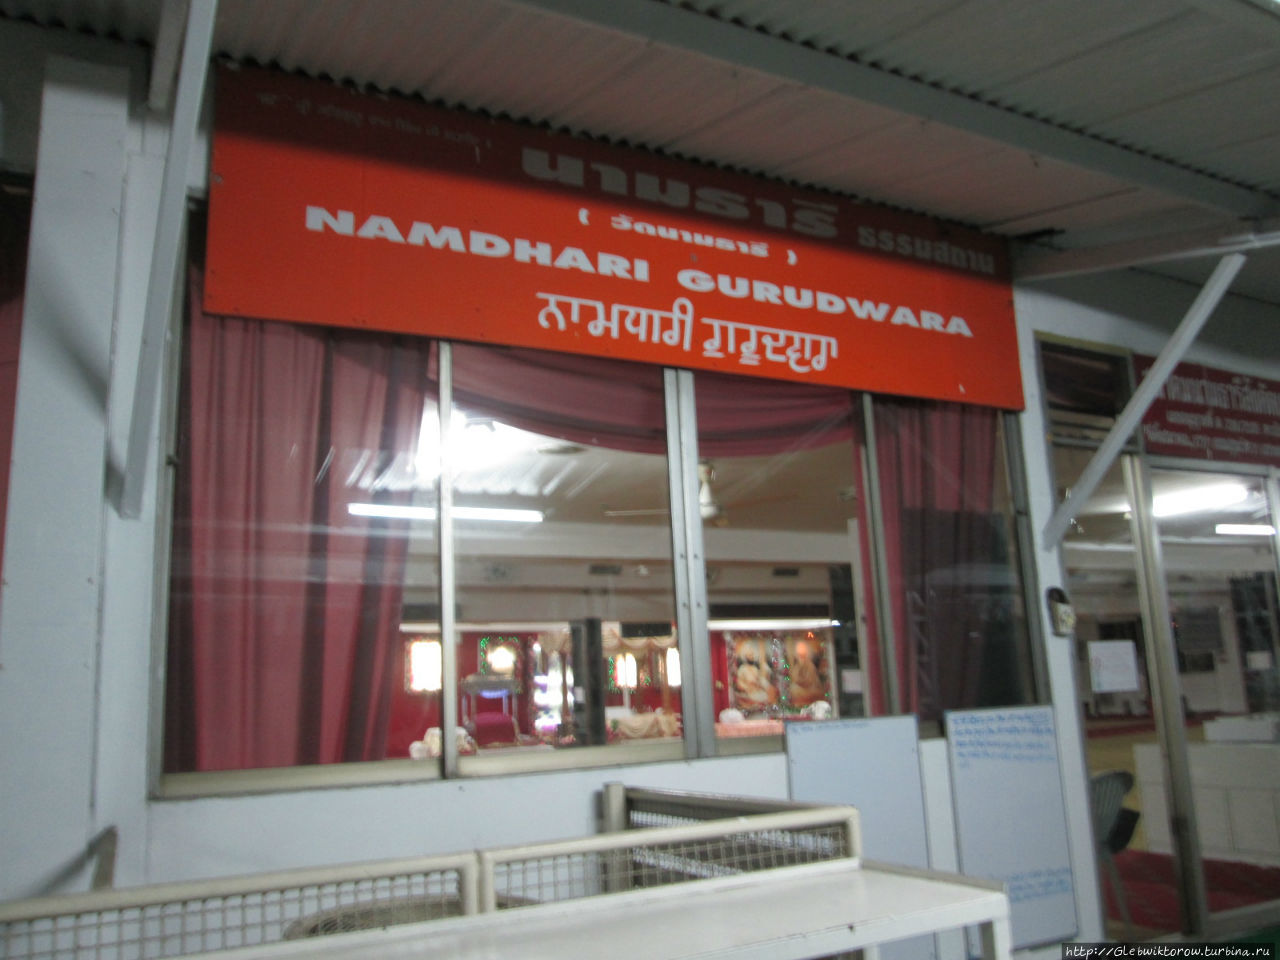 Гурдвара Намдхари / Namdhari Gurdwara